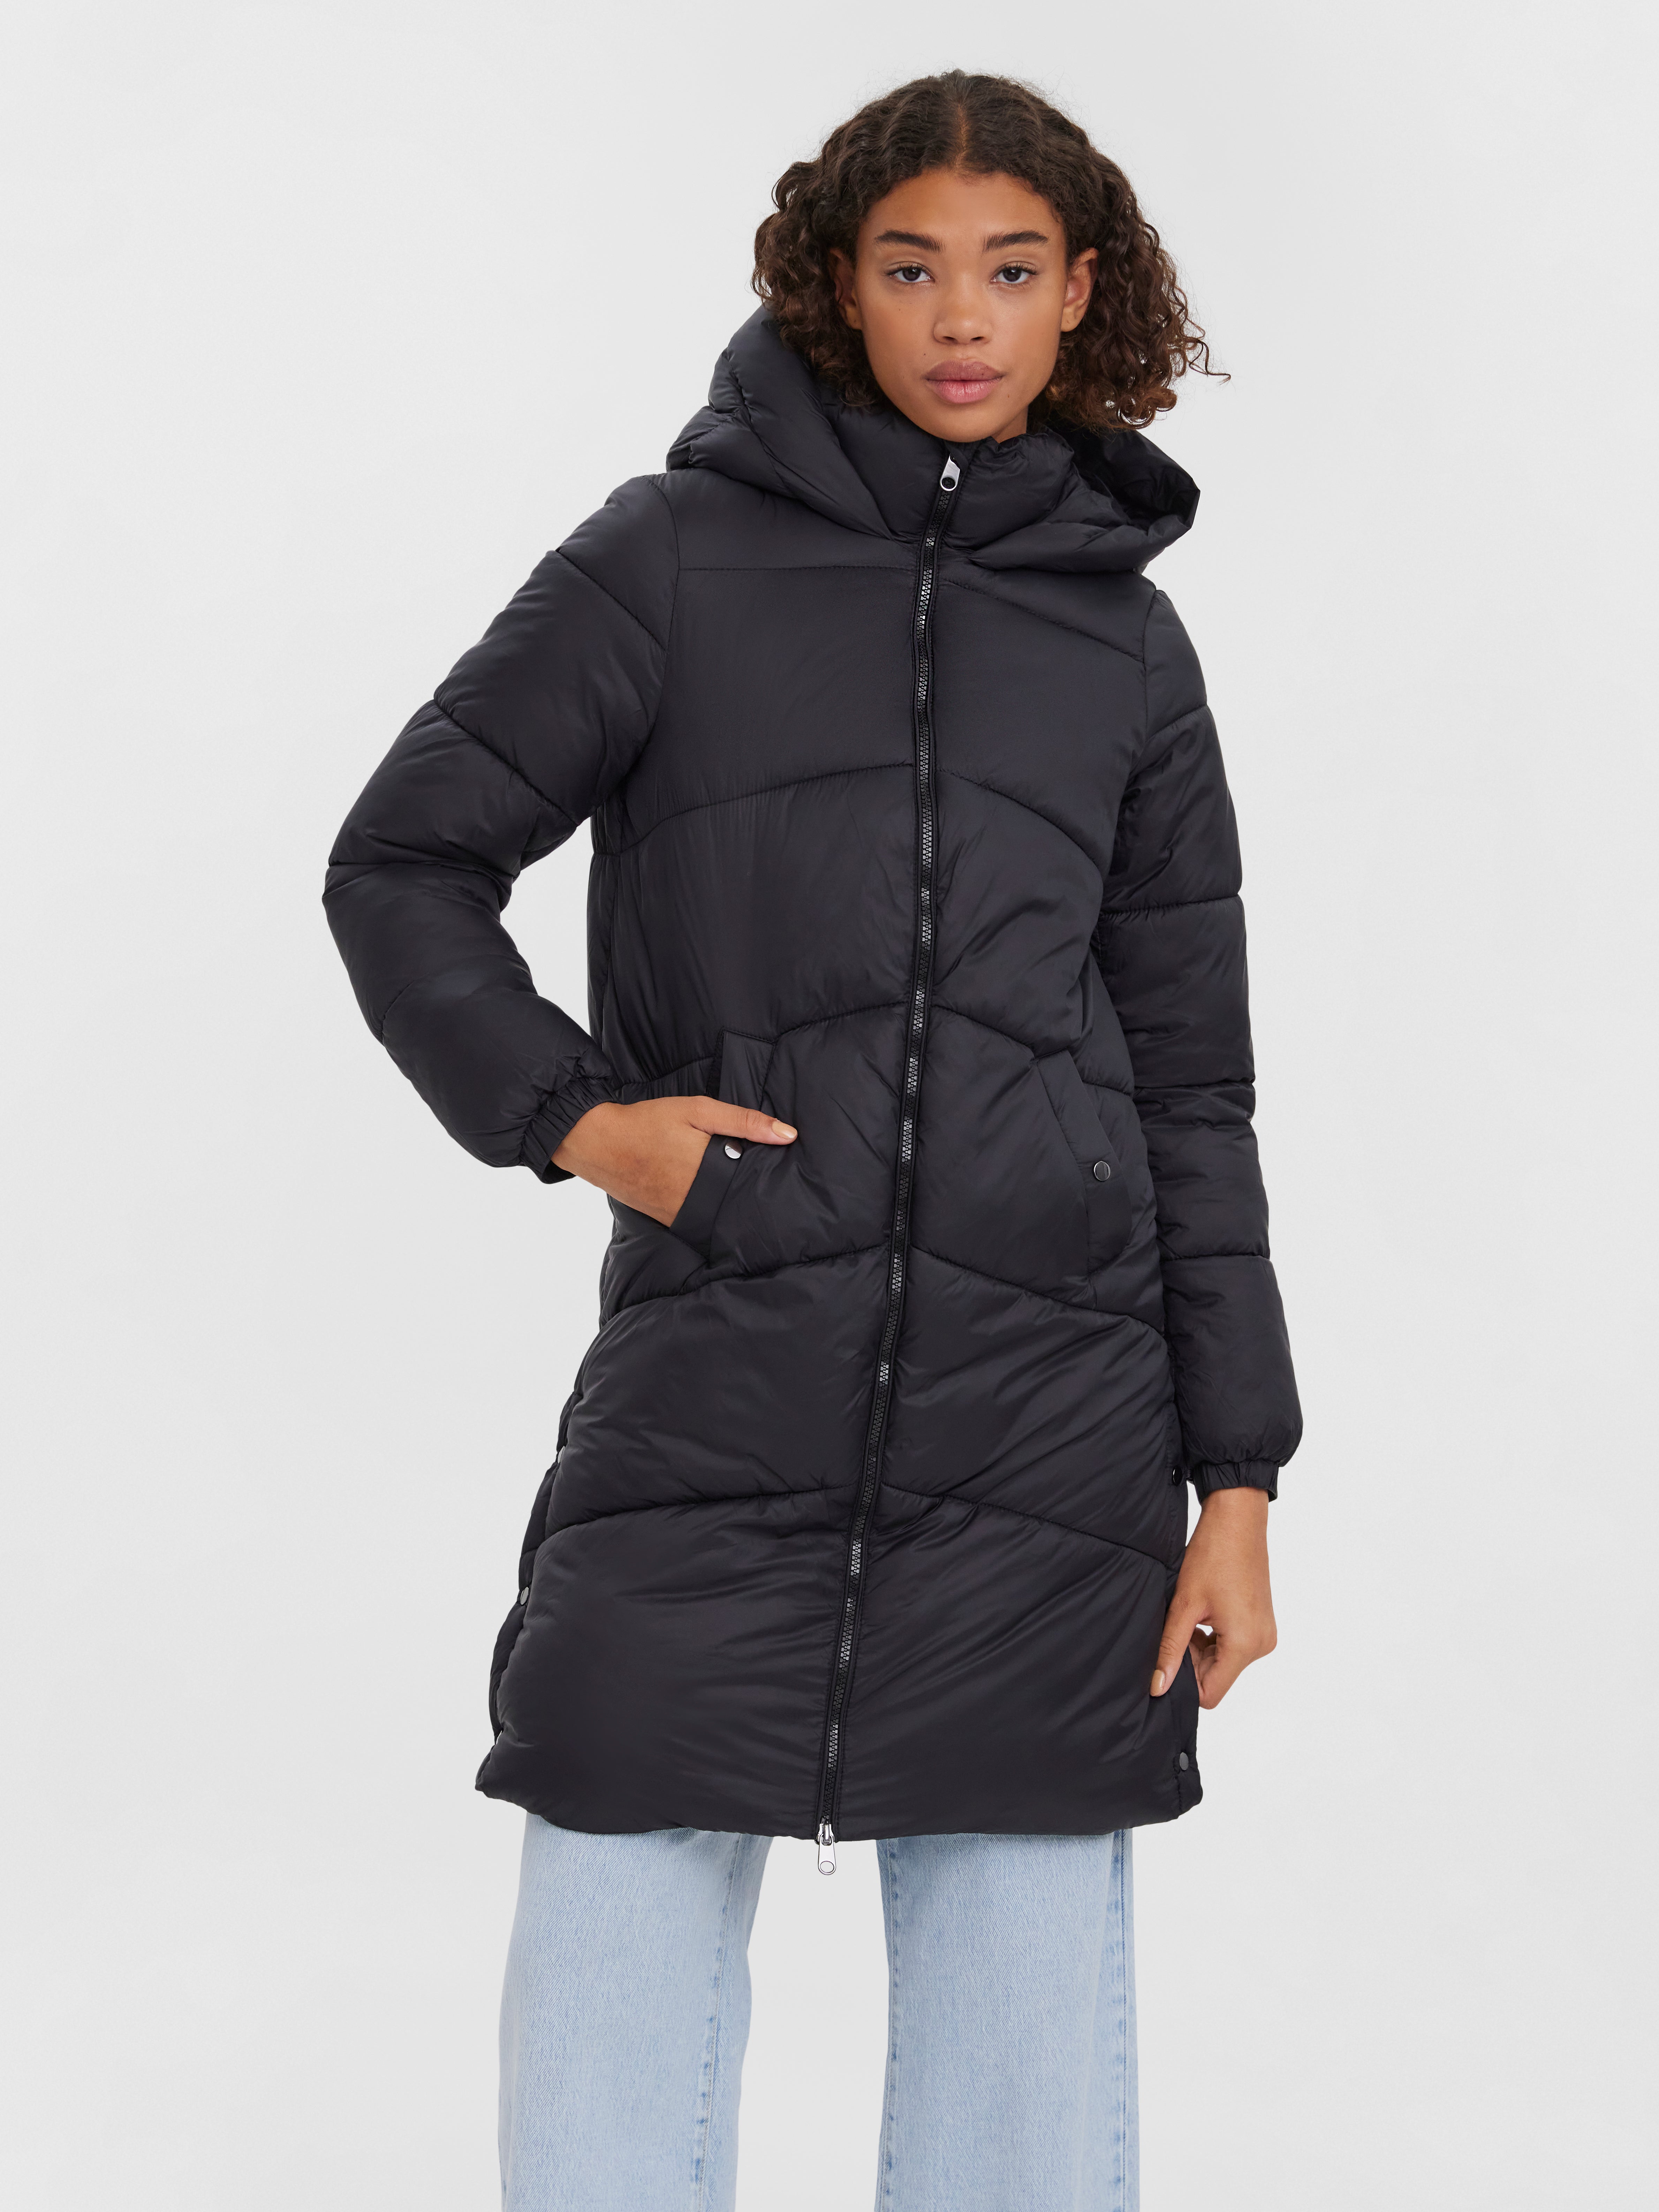 Vero Moda Long coat WOMEN FASHION Coats Cloth discount 52% Black S 